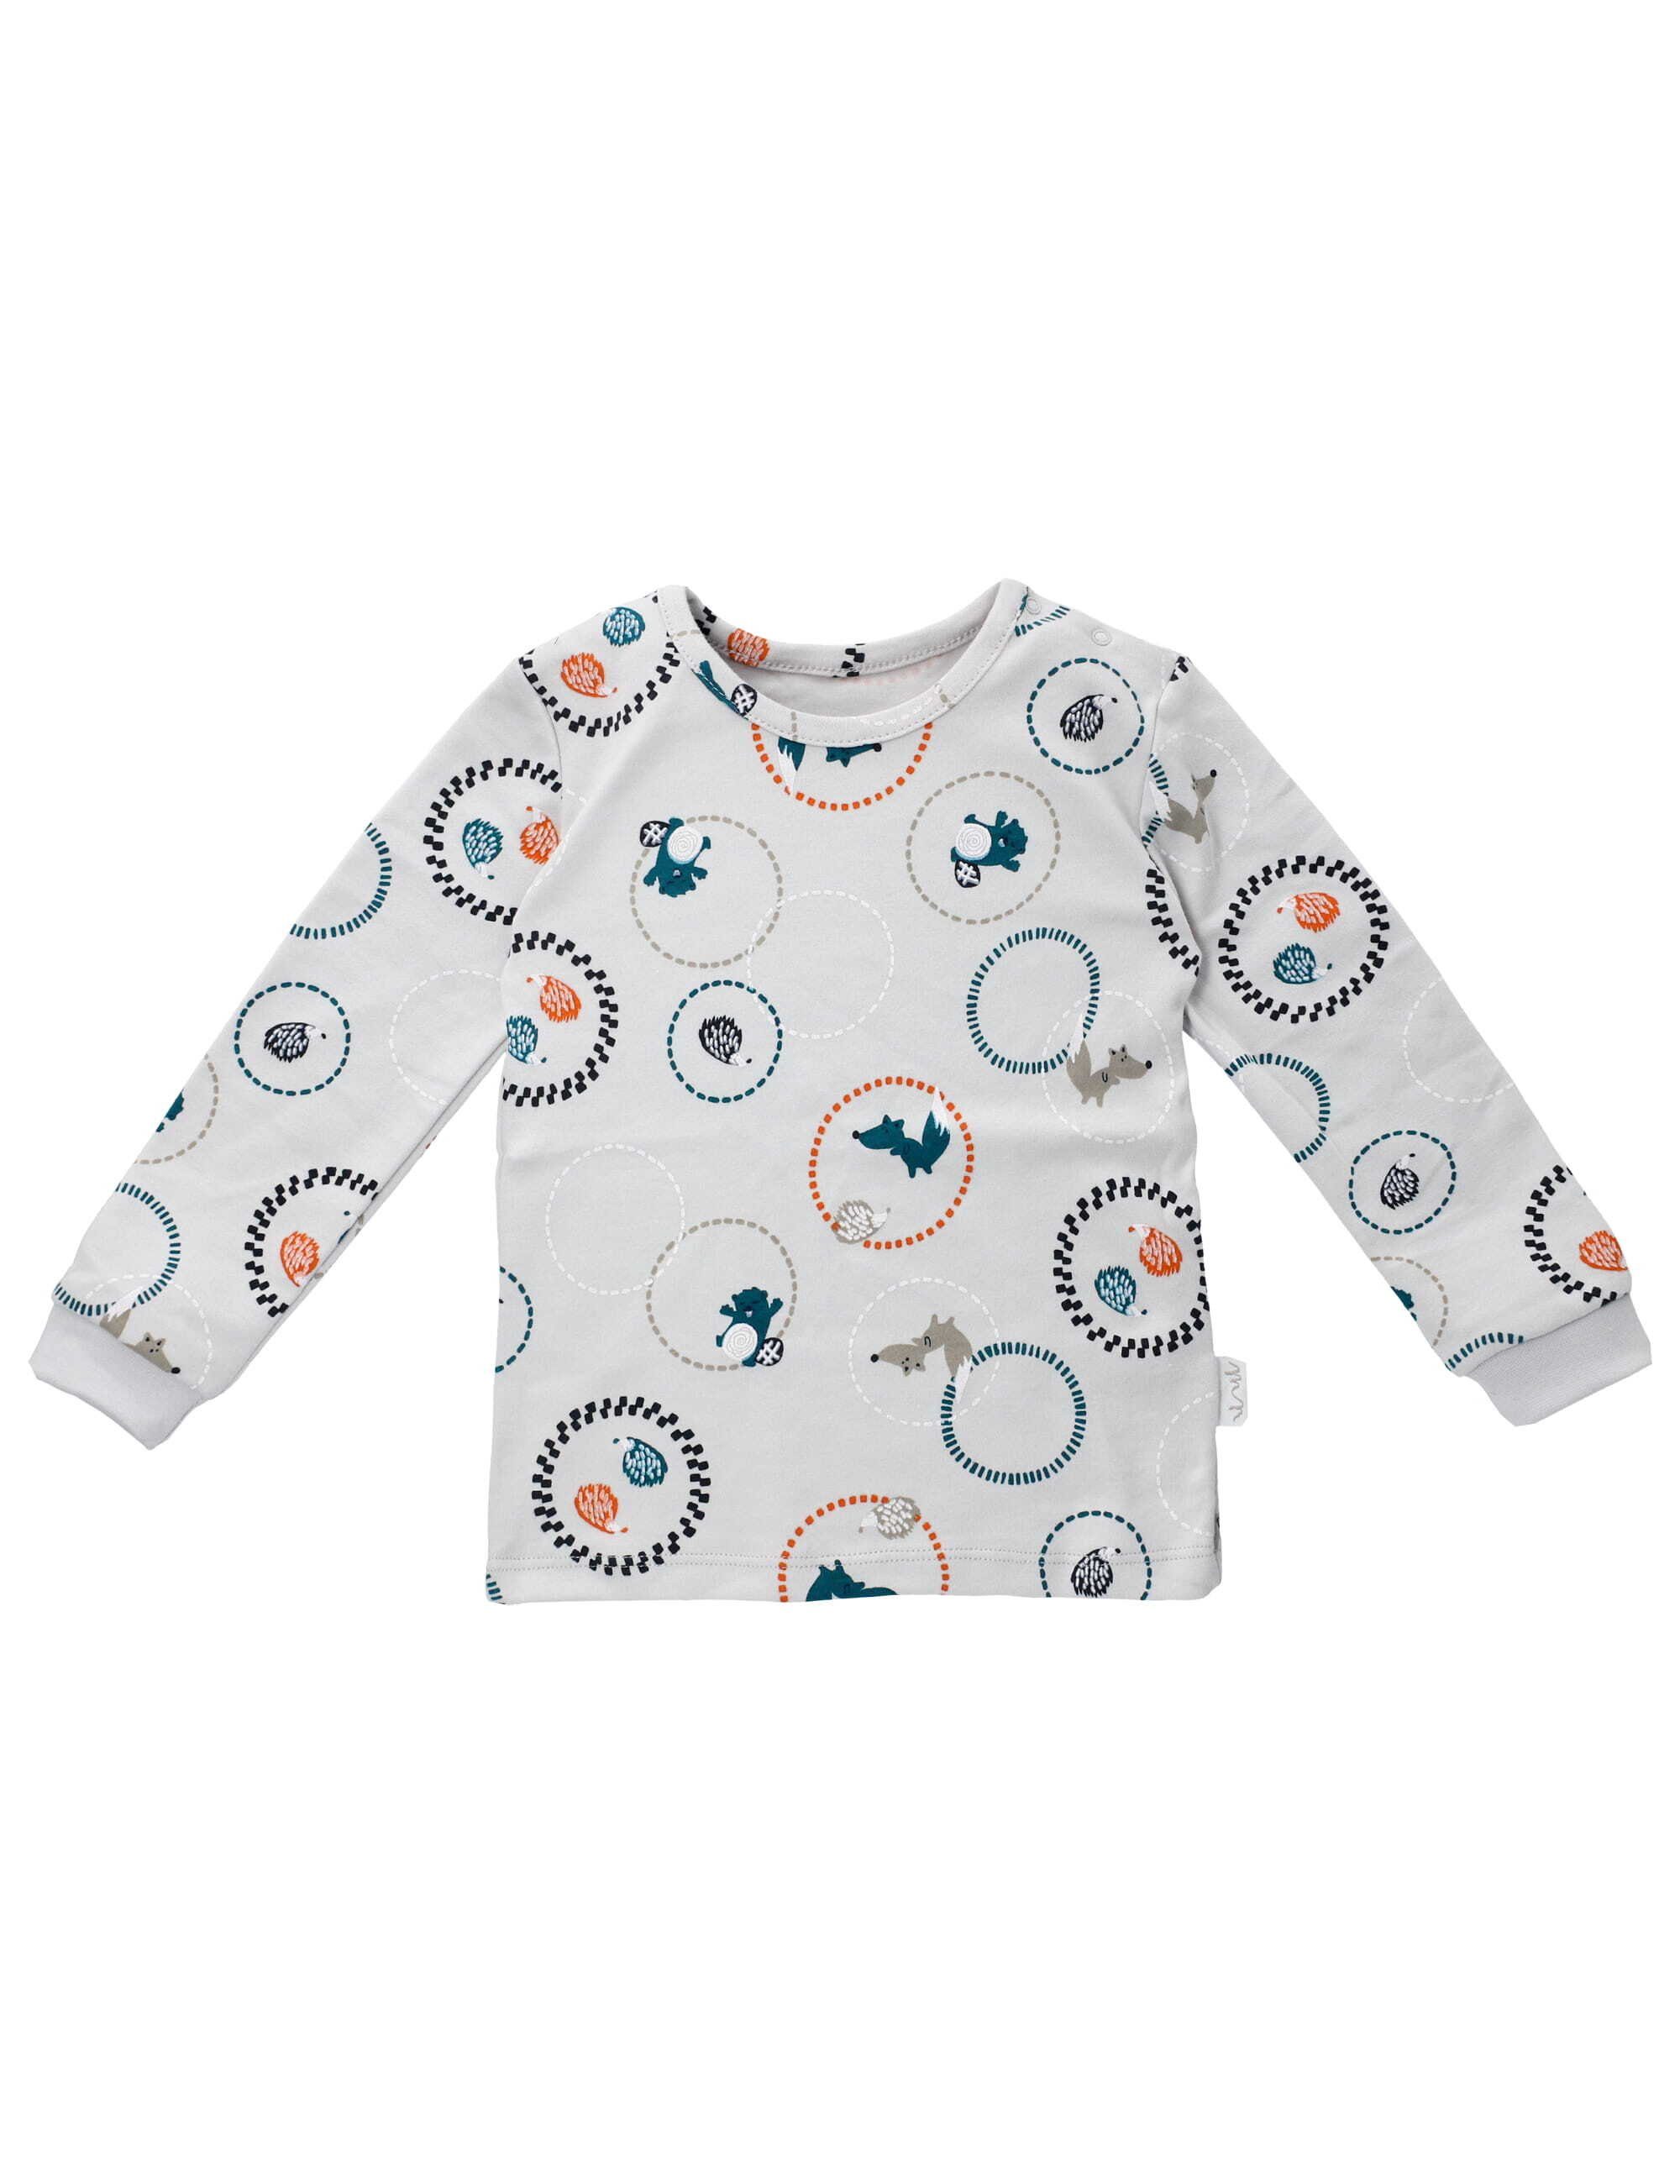 Baby Sweets Schlafanzug Set grau orange Waldtiere (1 tlg)